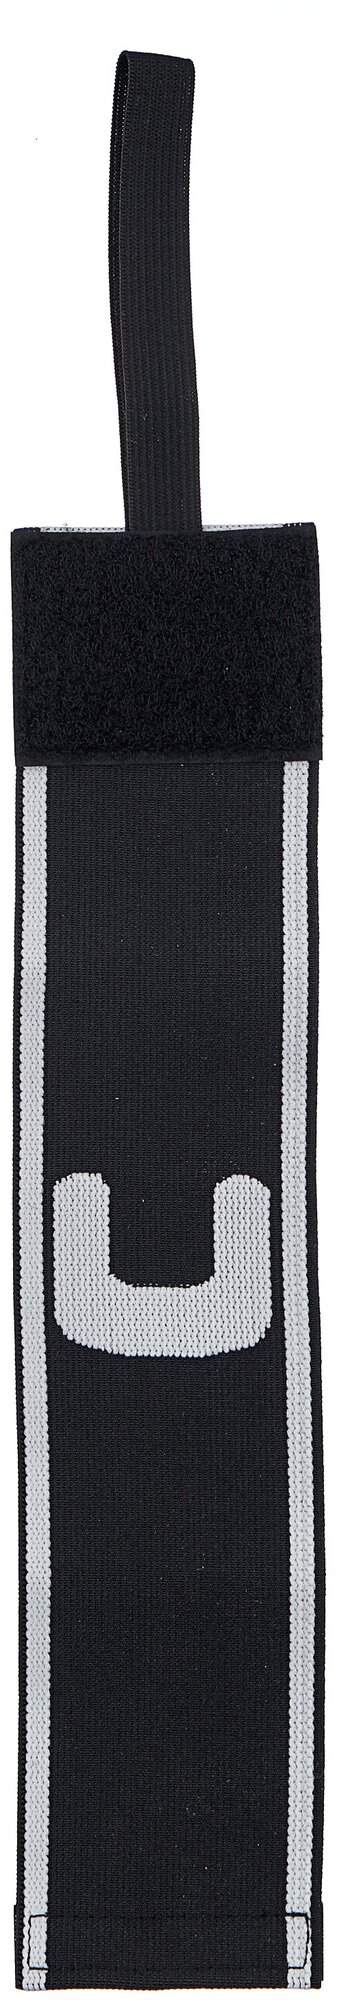 Капитанская повязка TORRES SS11002-02